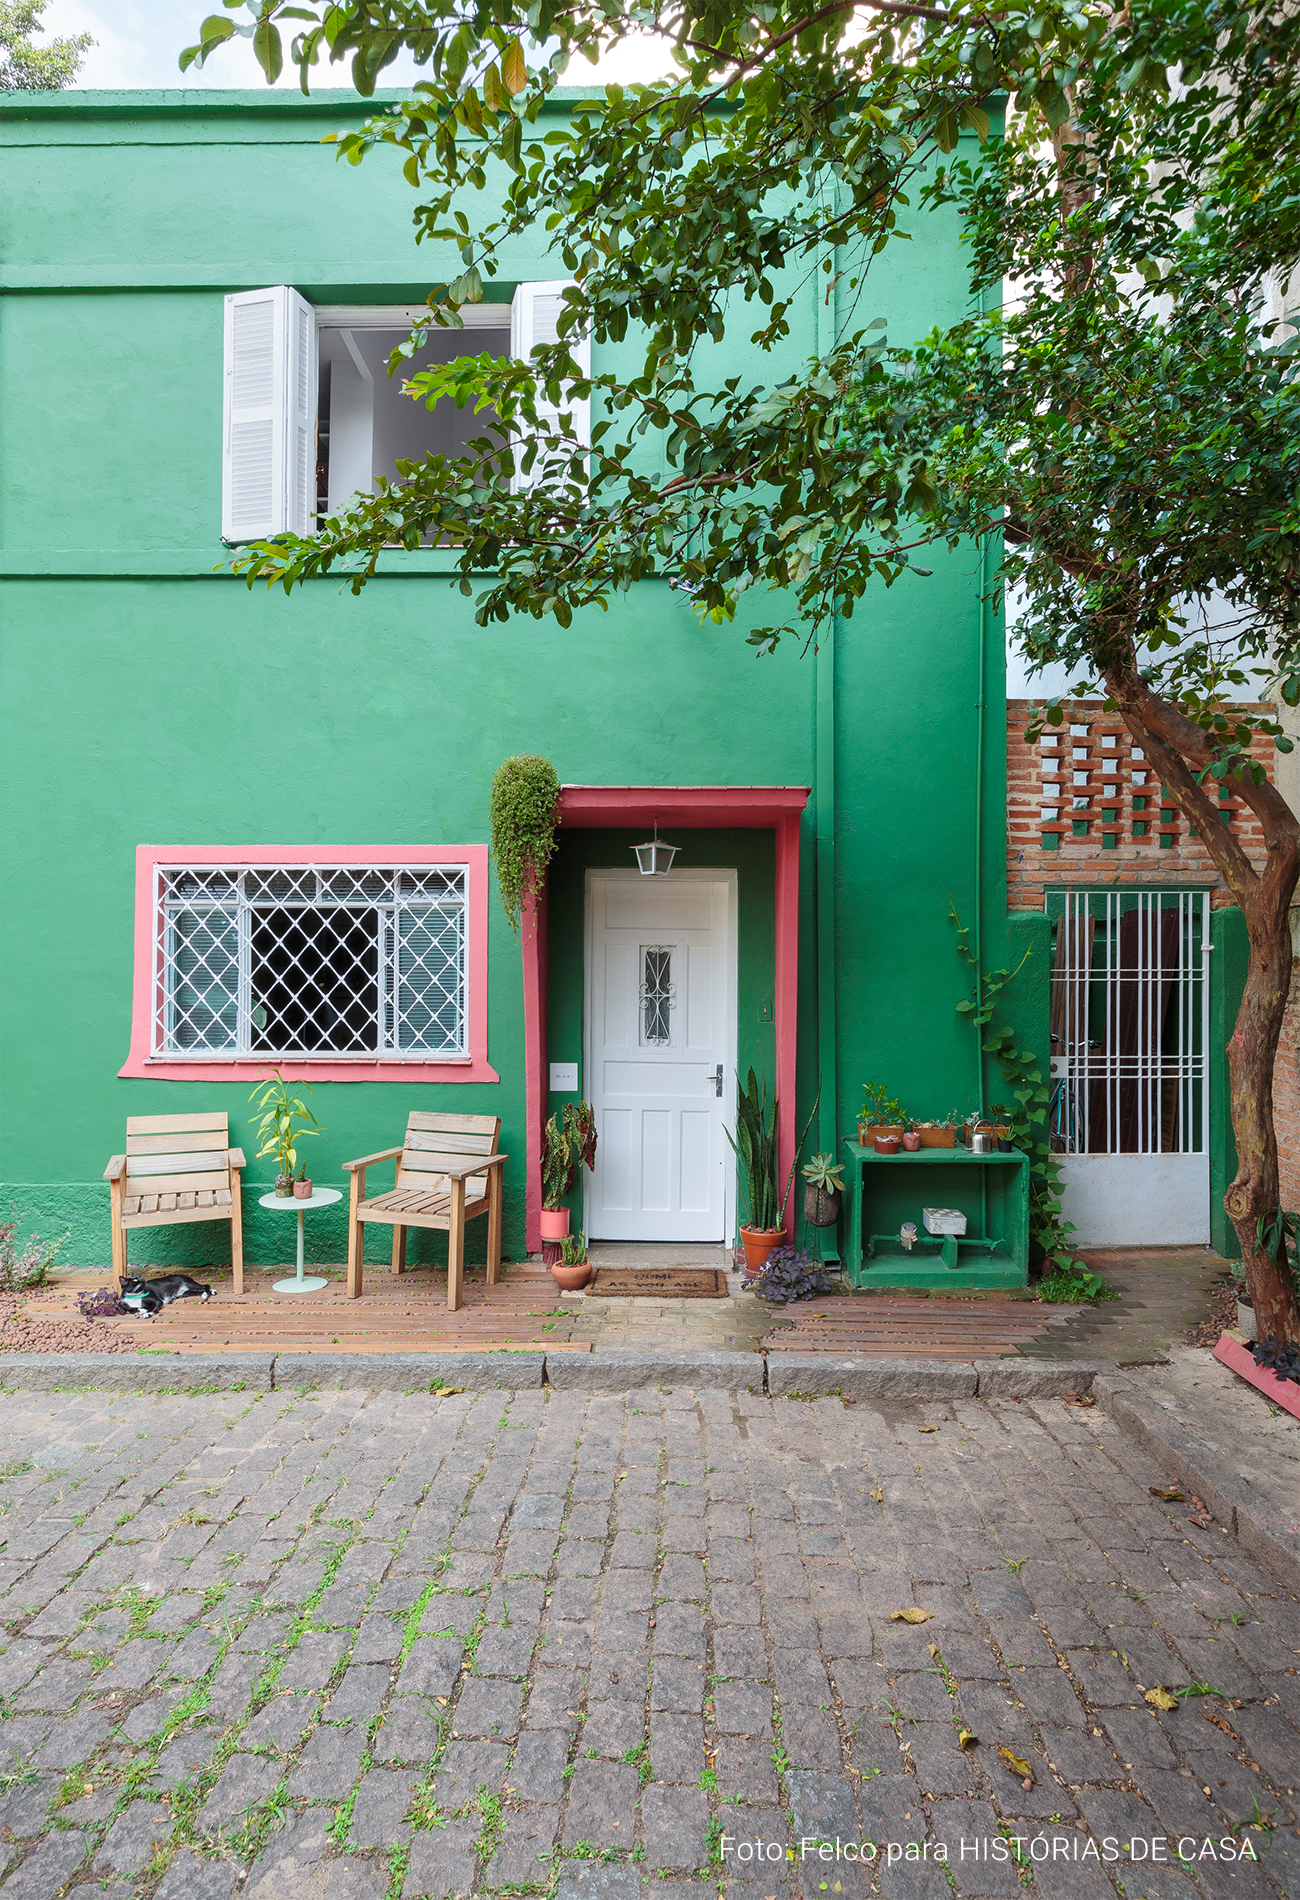 Casa de vila colorida, com fachada verde, quintal e ambientes integrados